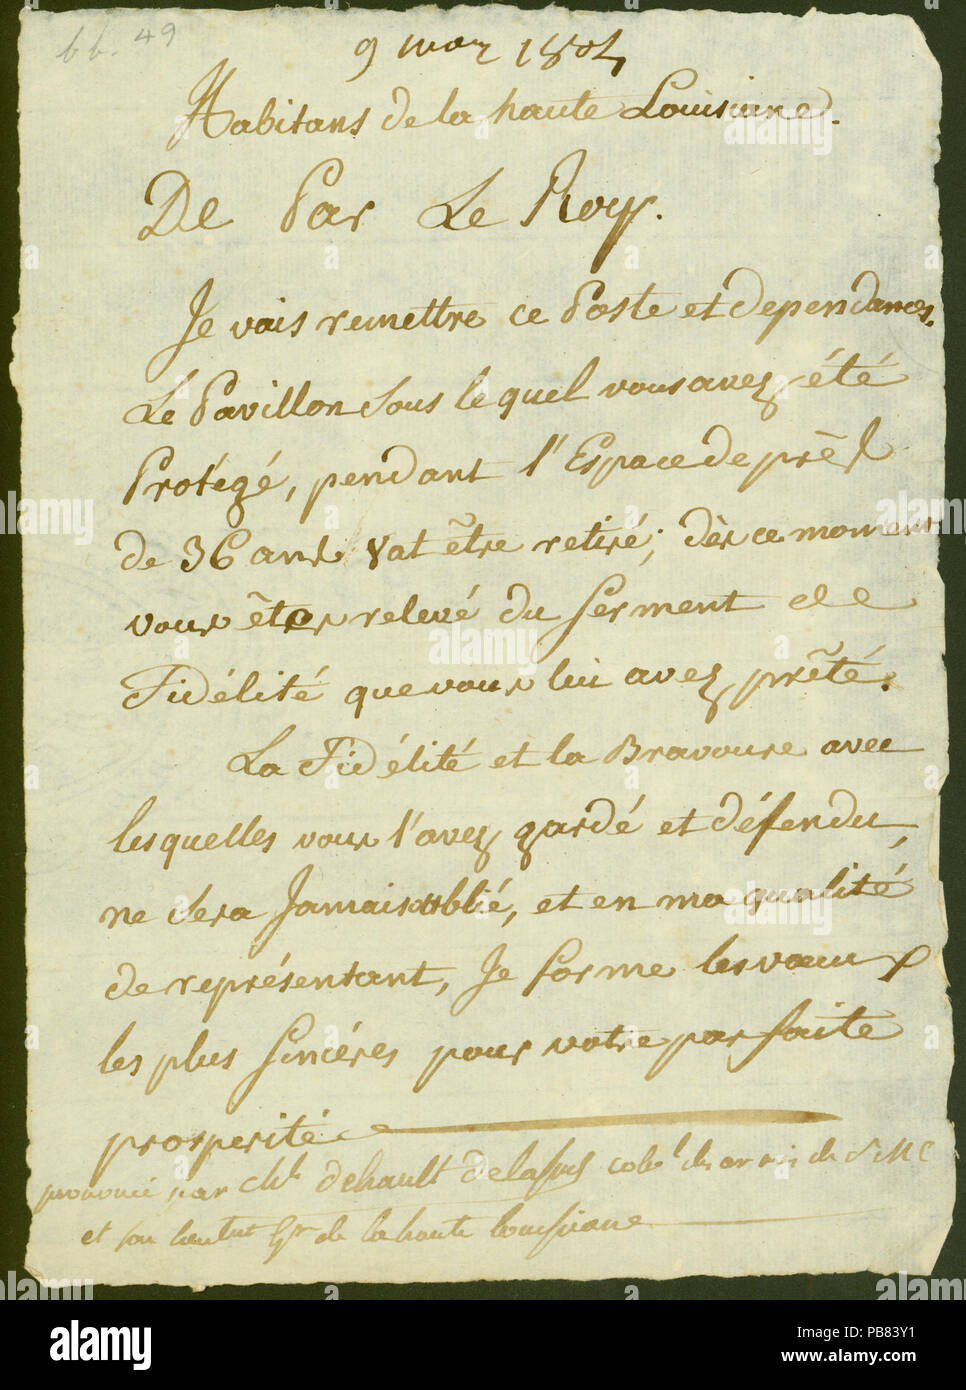 1120 Notice of Charles Dehault Delassus to the public regarding the Louisiana transfer, March 9, 1804 Stock Photo